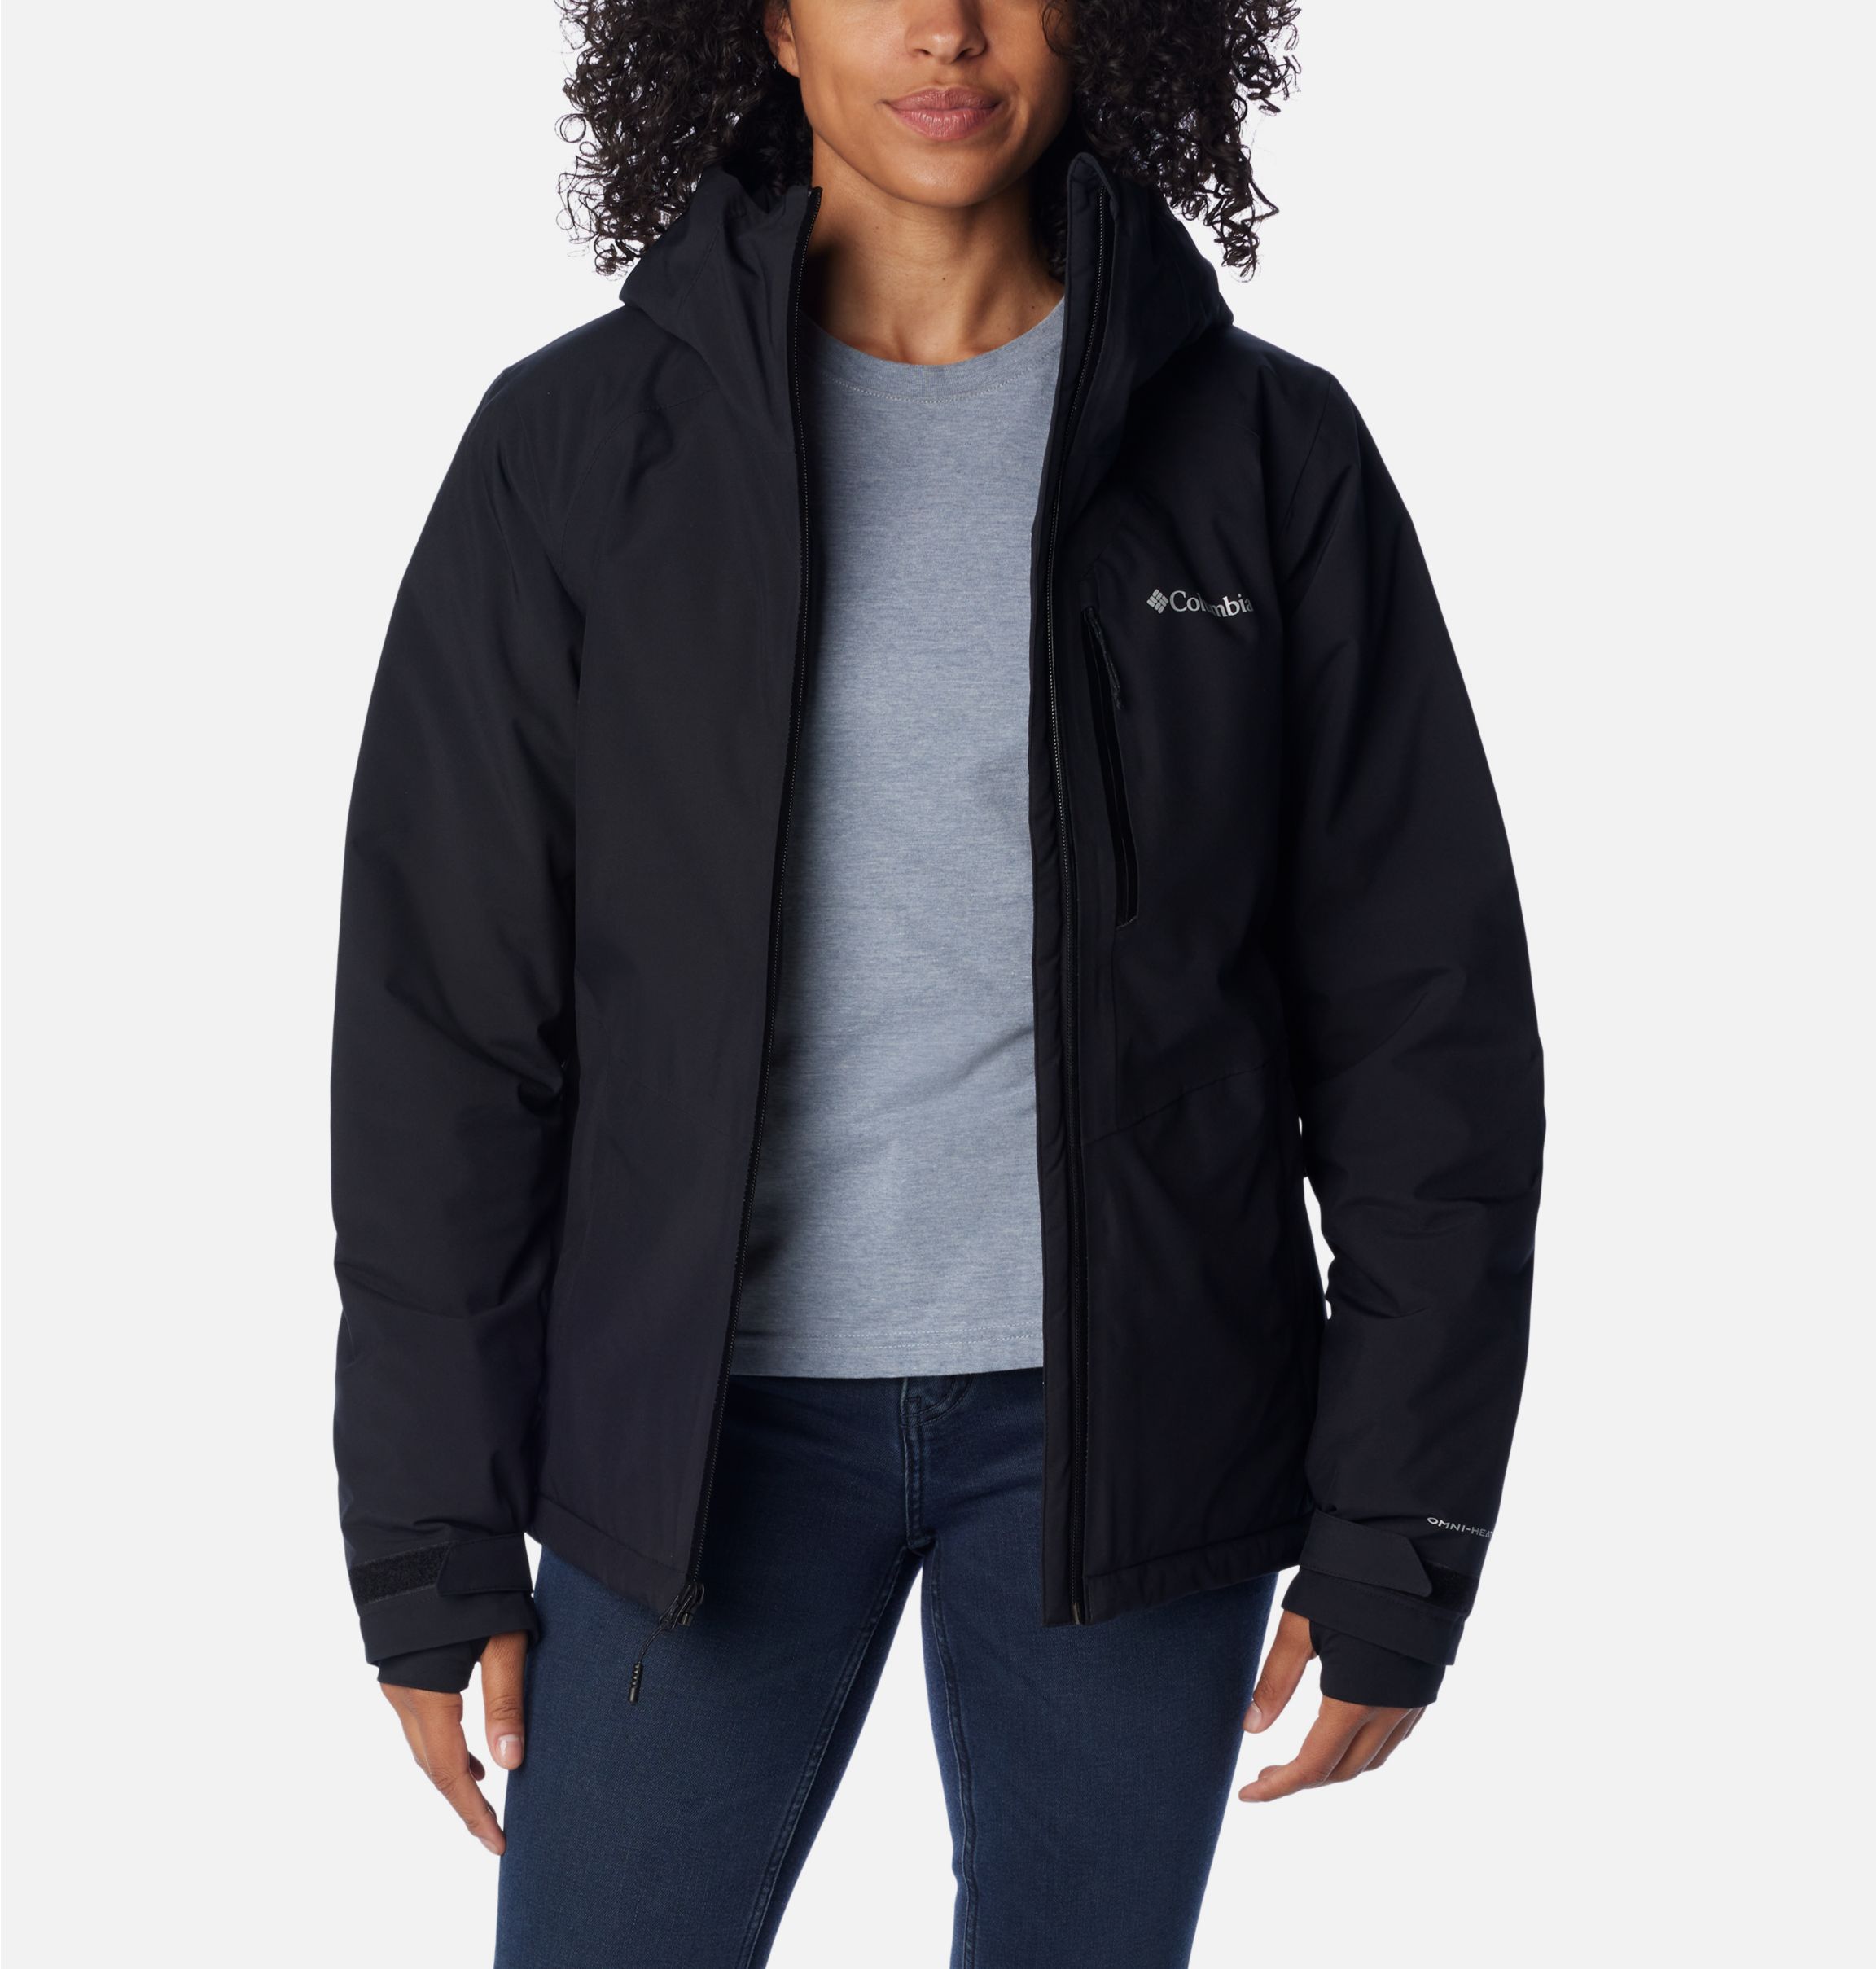 Women's Explorer's Edge™ Insulated Jacket | Columbia Sportswear